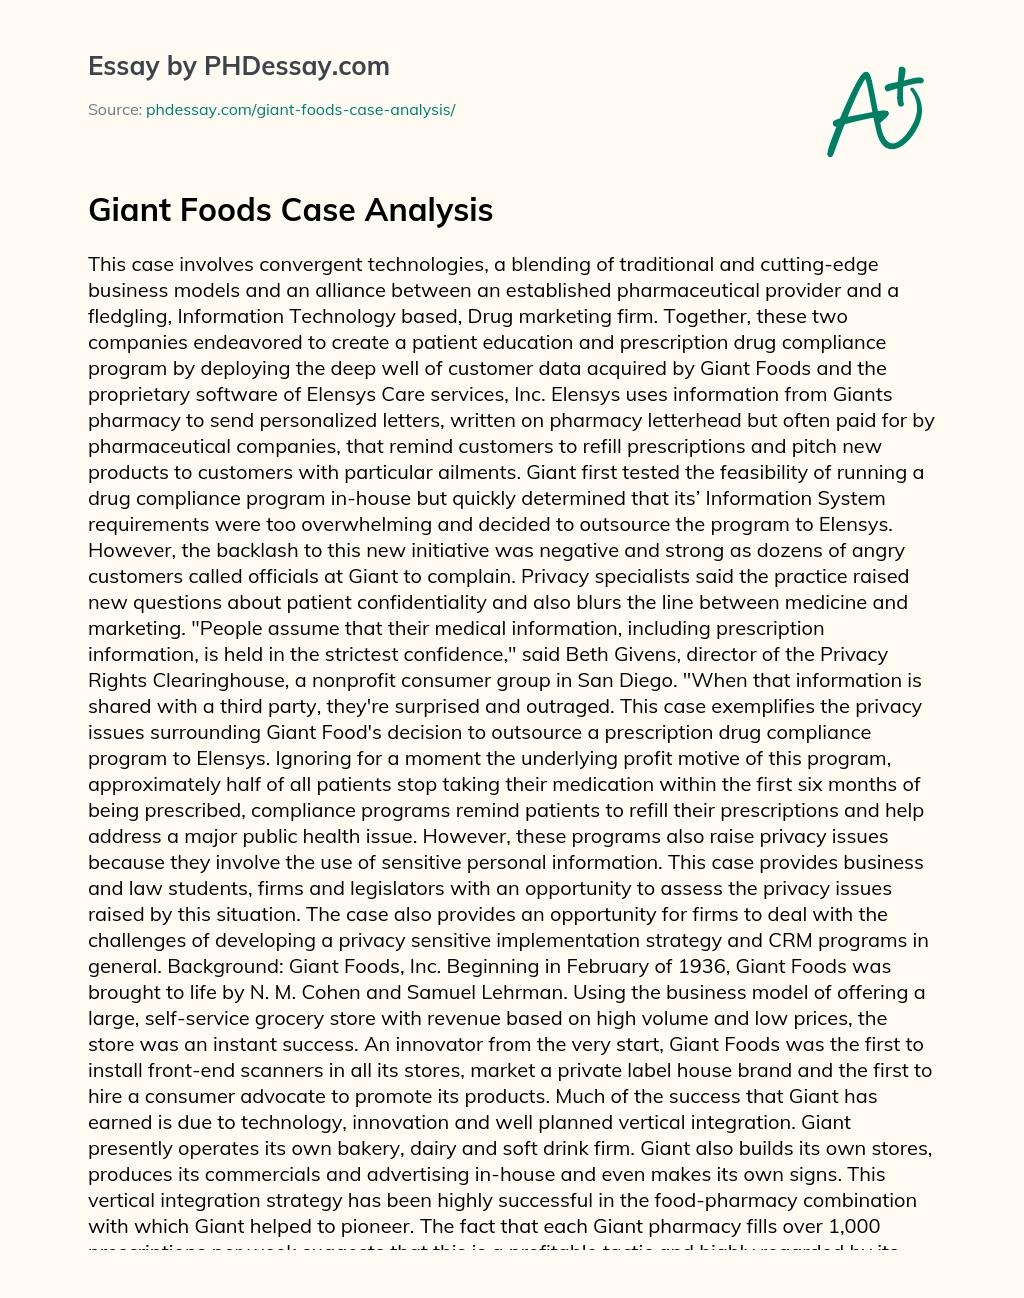 Giant Foods Case Analysis essay